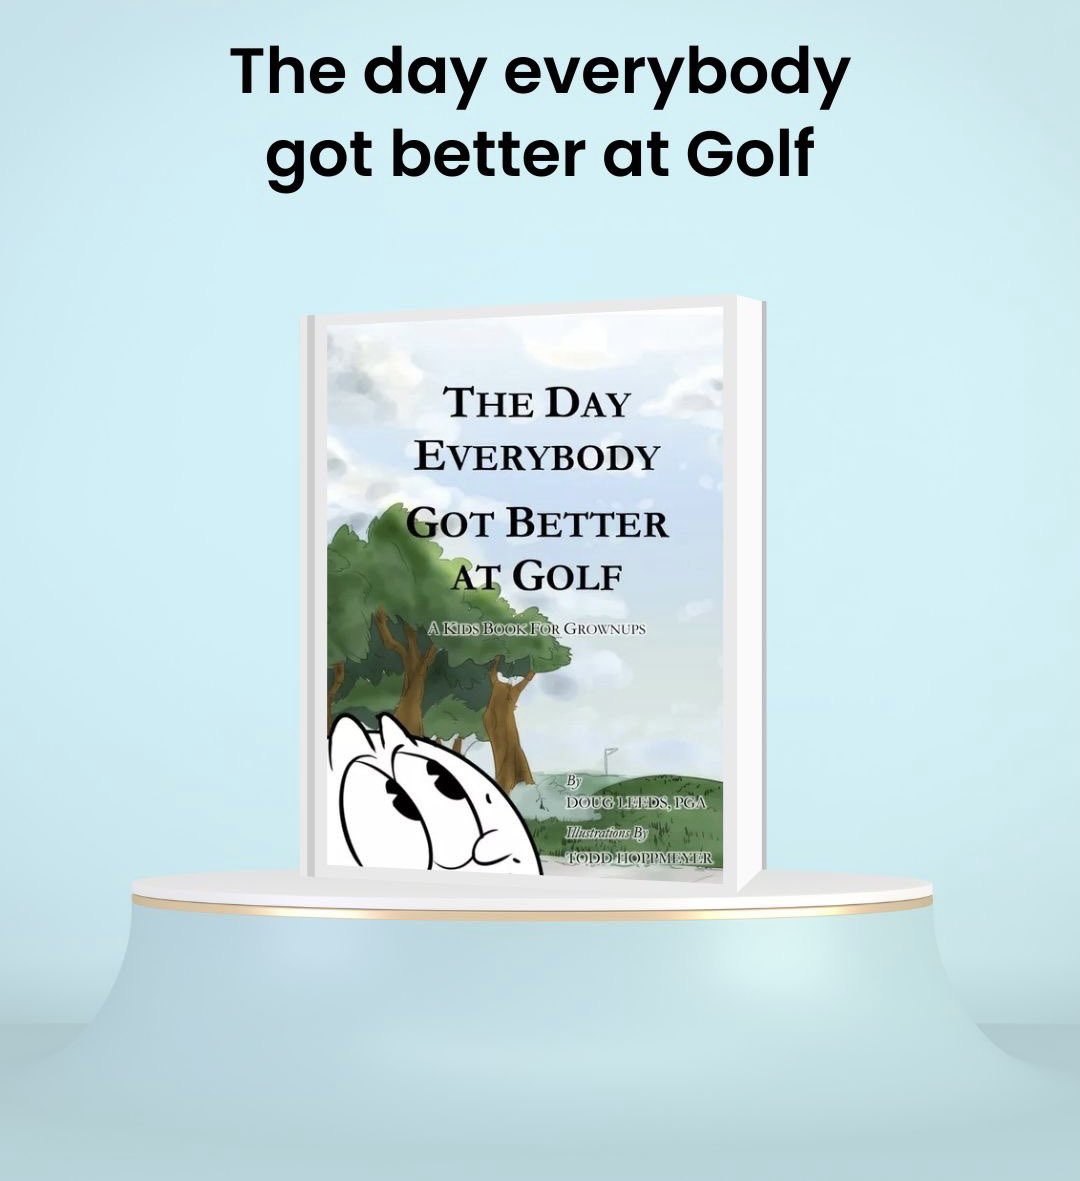 Sharing the top book picks to inspire and guide young talents on their golf journey 💯
.
.
.
.
.
#golfergirl #fitgirl  #borntoplaygolf #callawaygolf #callawayapparel #callawaycustoms  #golfplayer #golfislove #jaininfopath #jaininfopathdurg #shikshajainjaipur #golfmeme